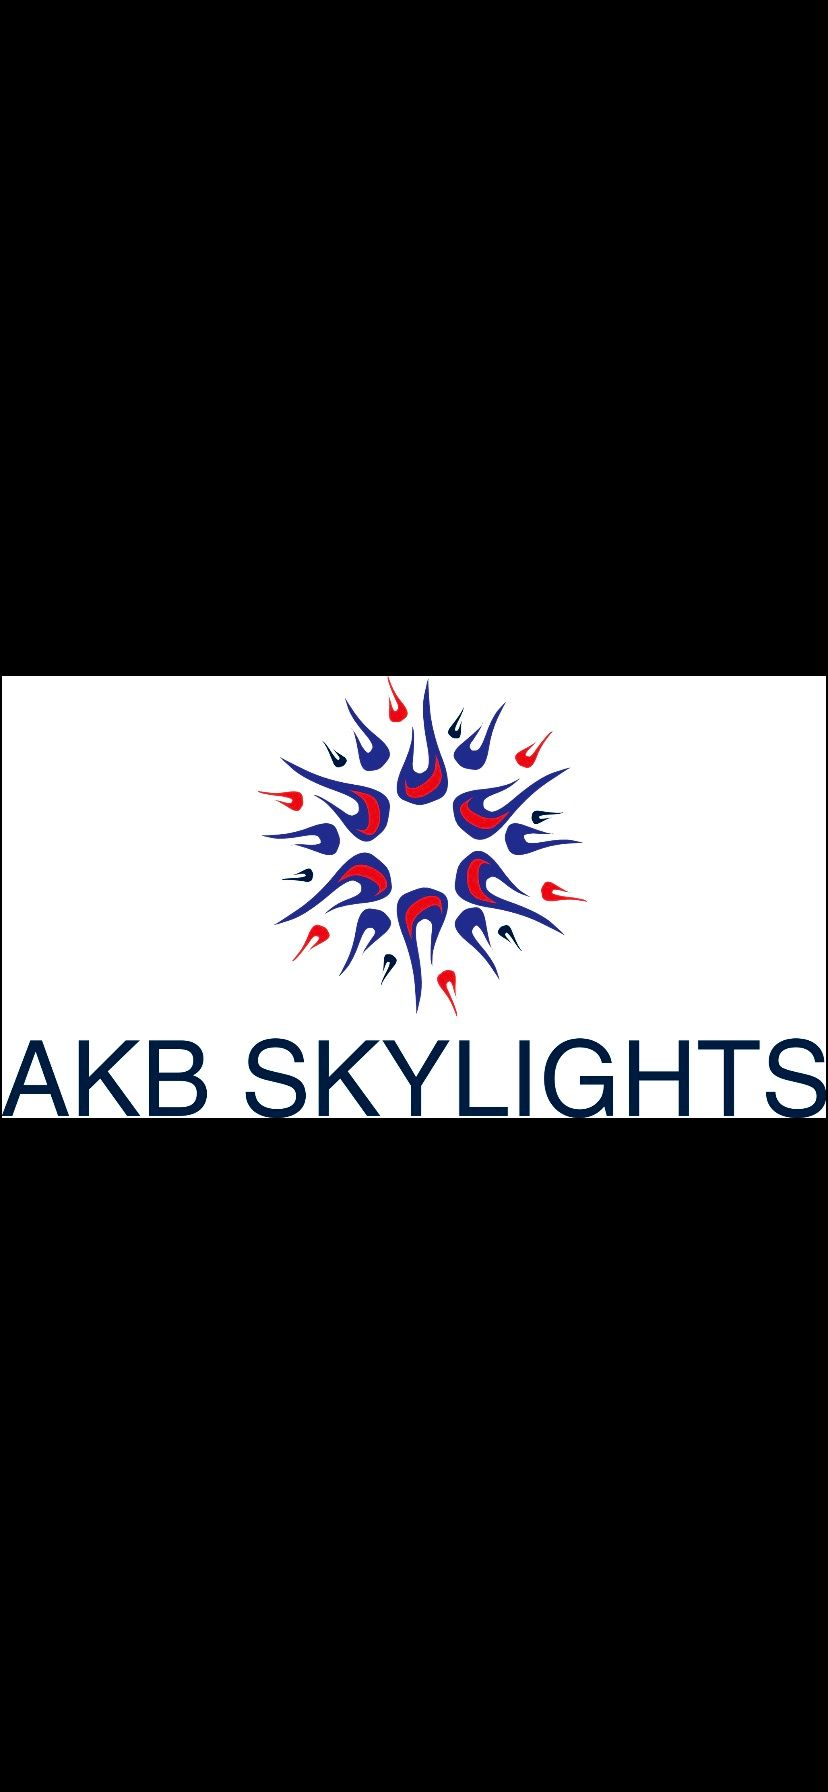 AKB Skylights